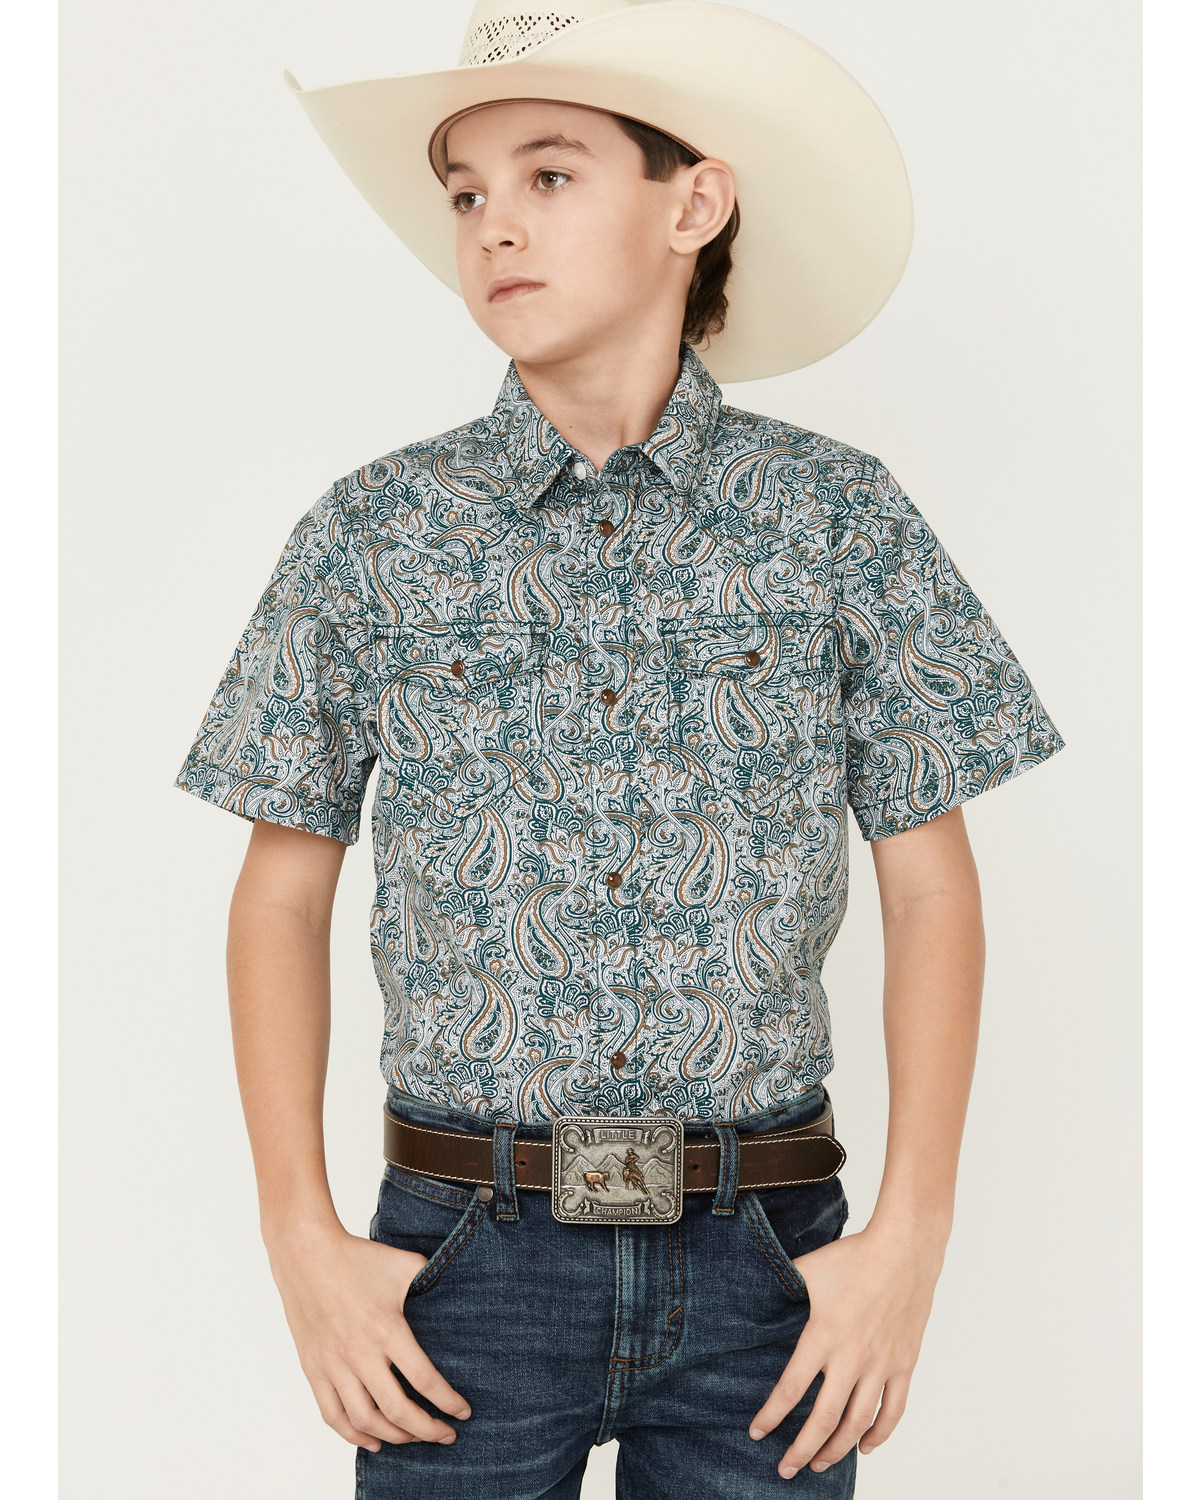 Cody James Boys' Paisley Print Short Sleeve Western Shirt